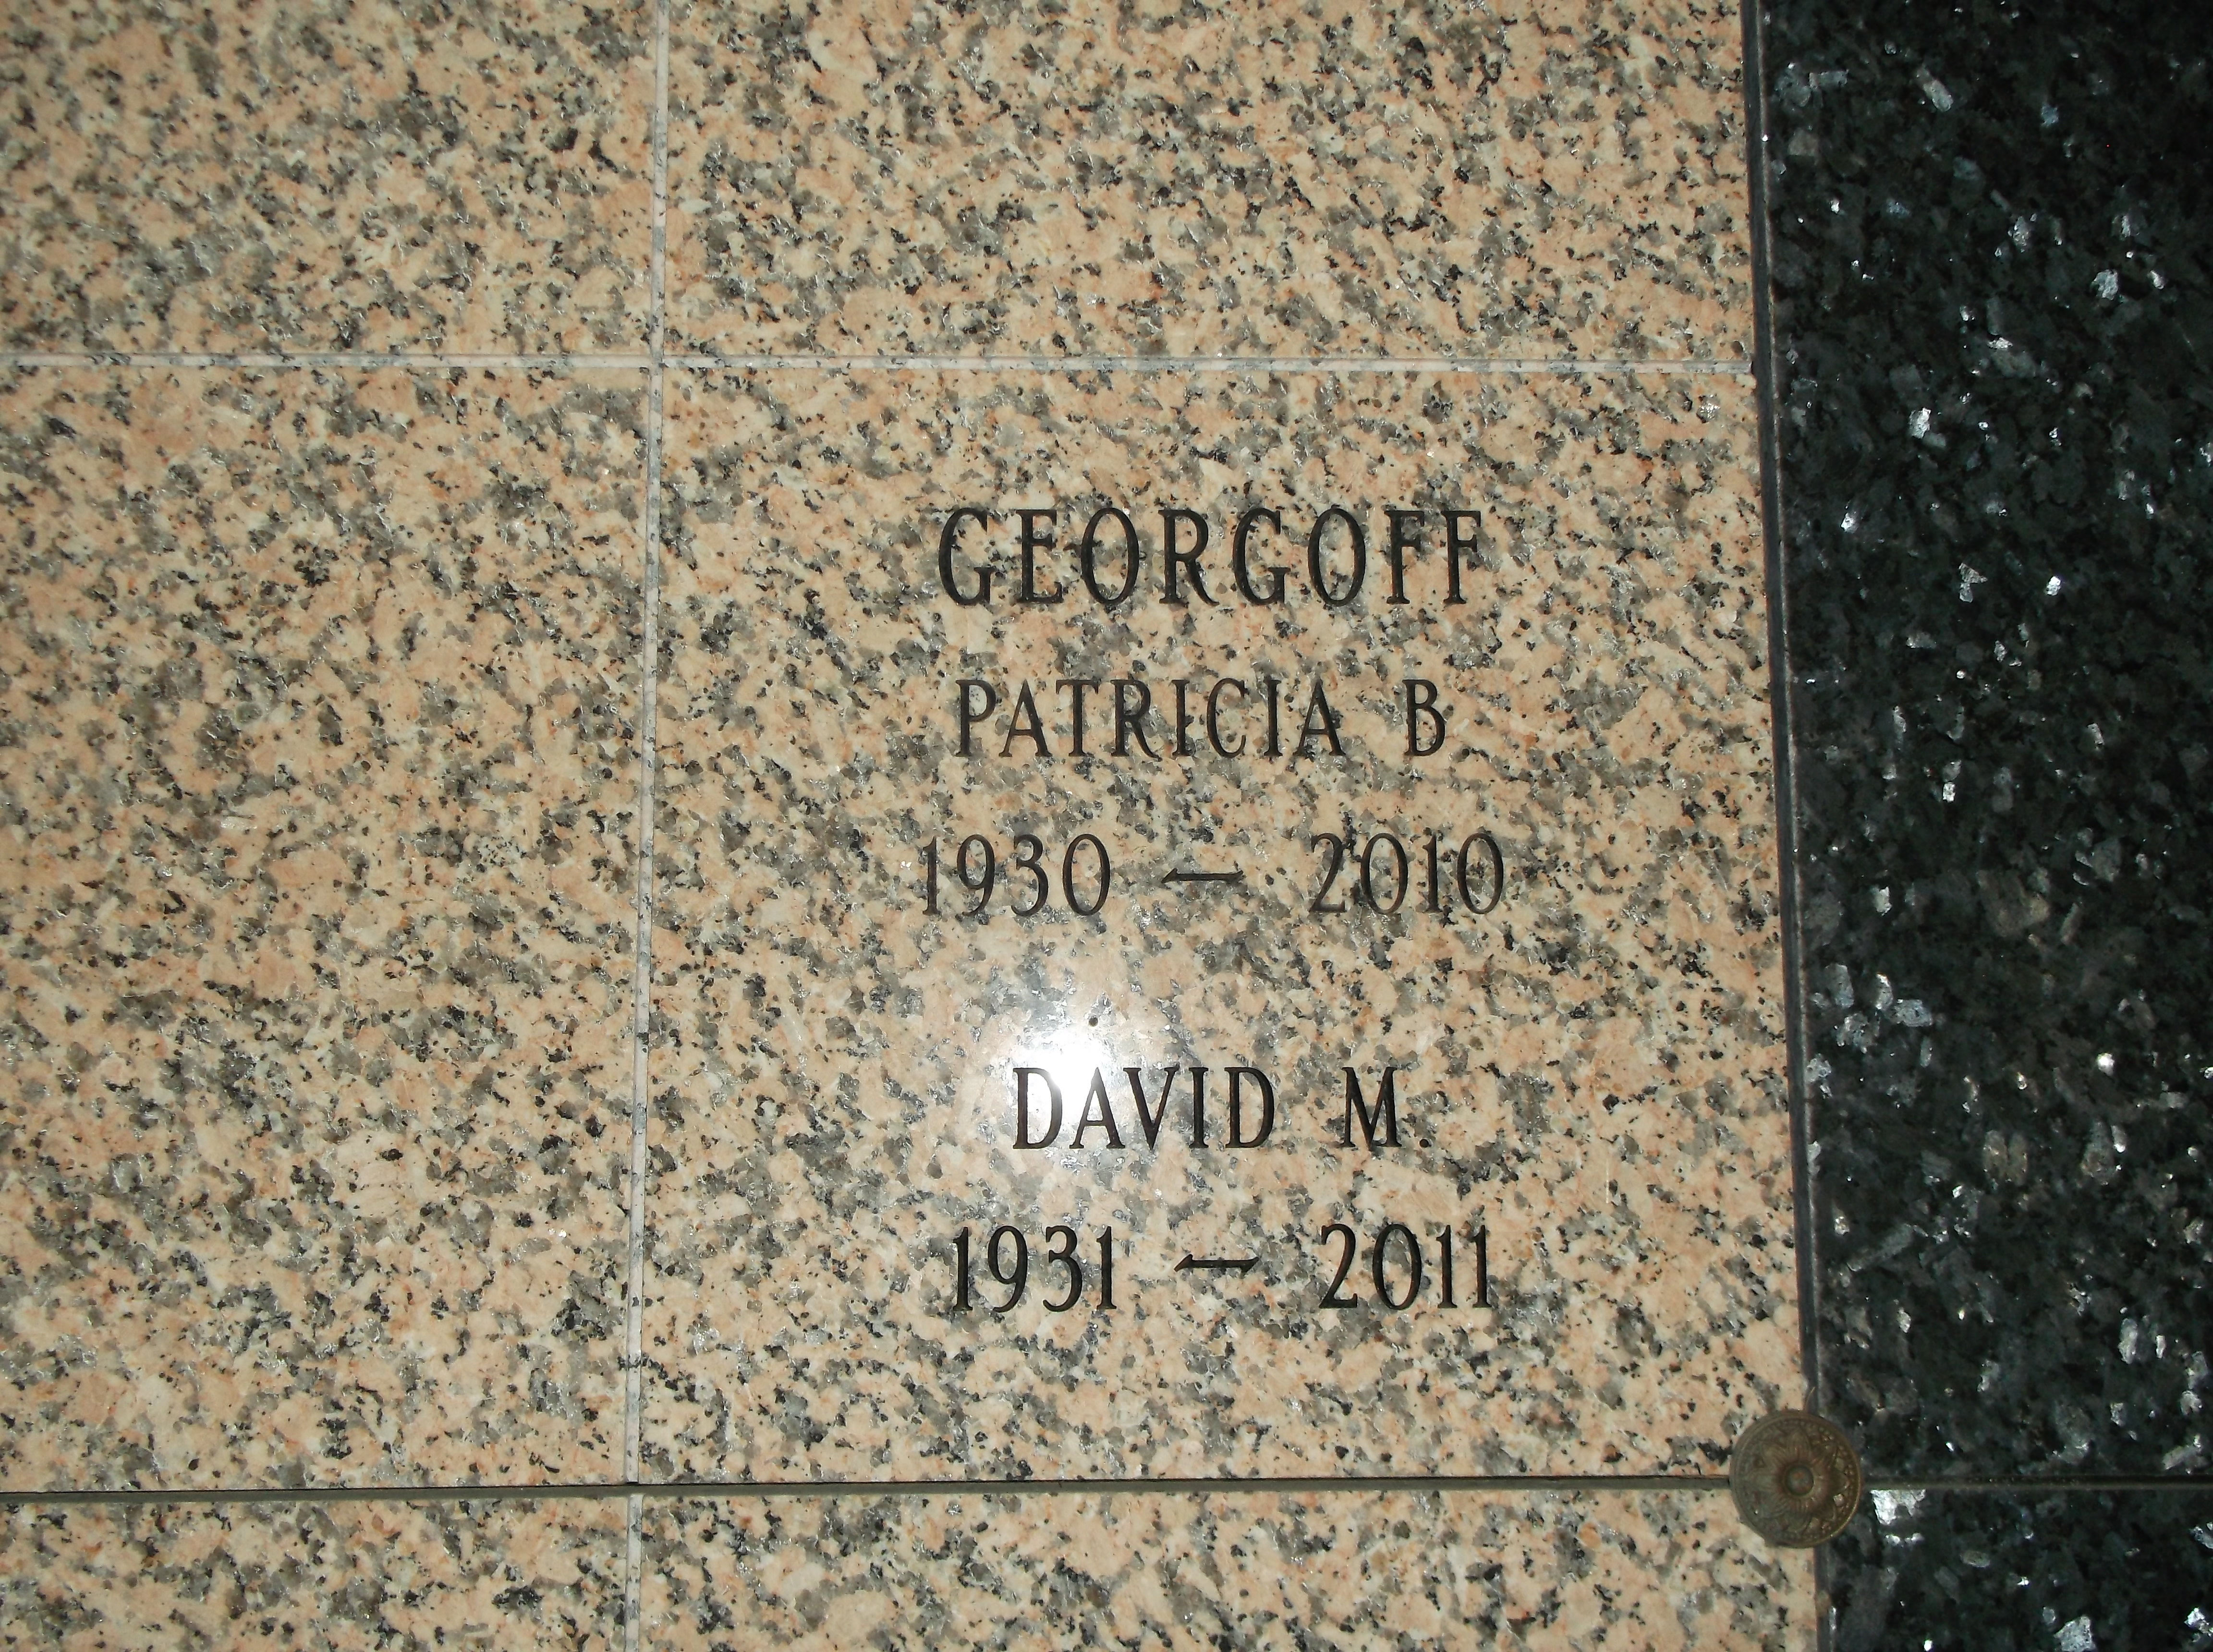 David M Georgoff